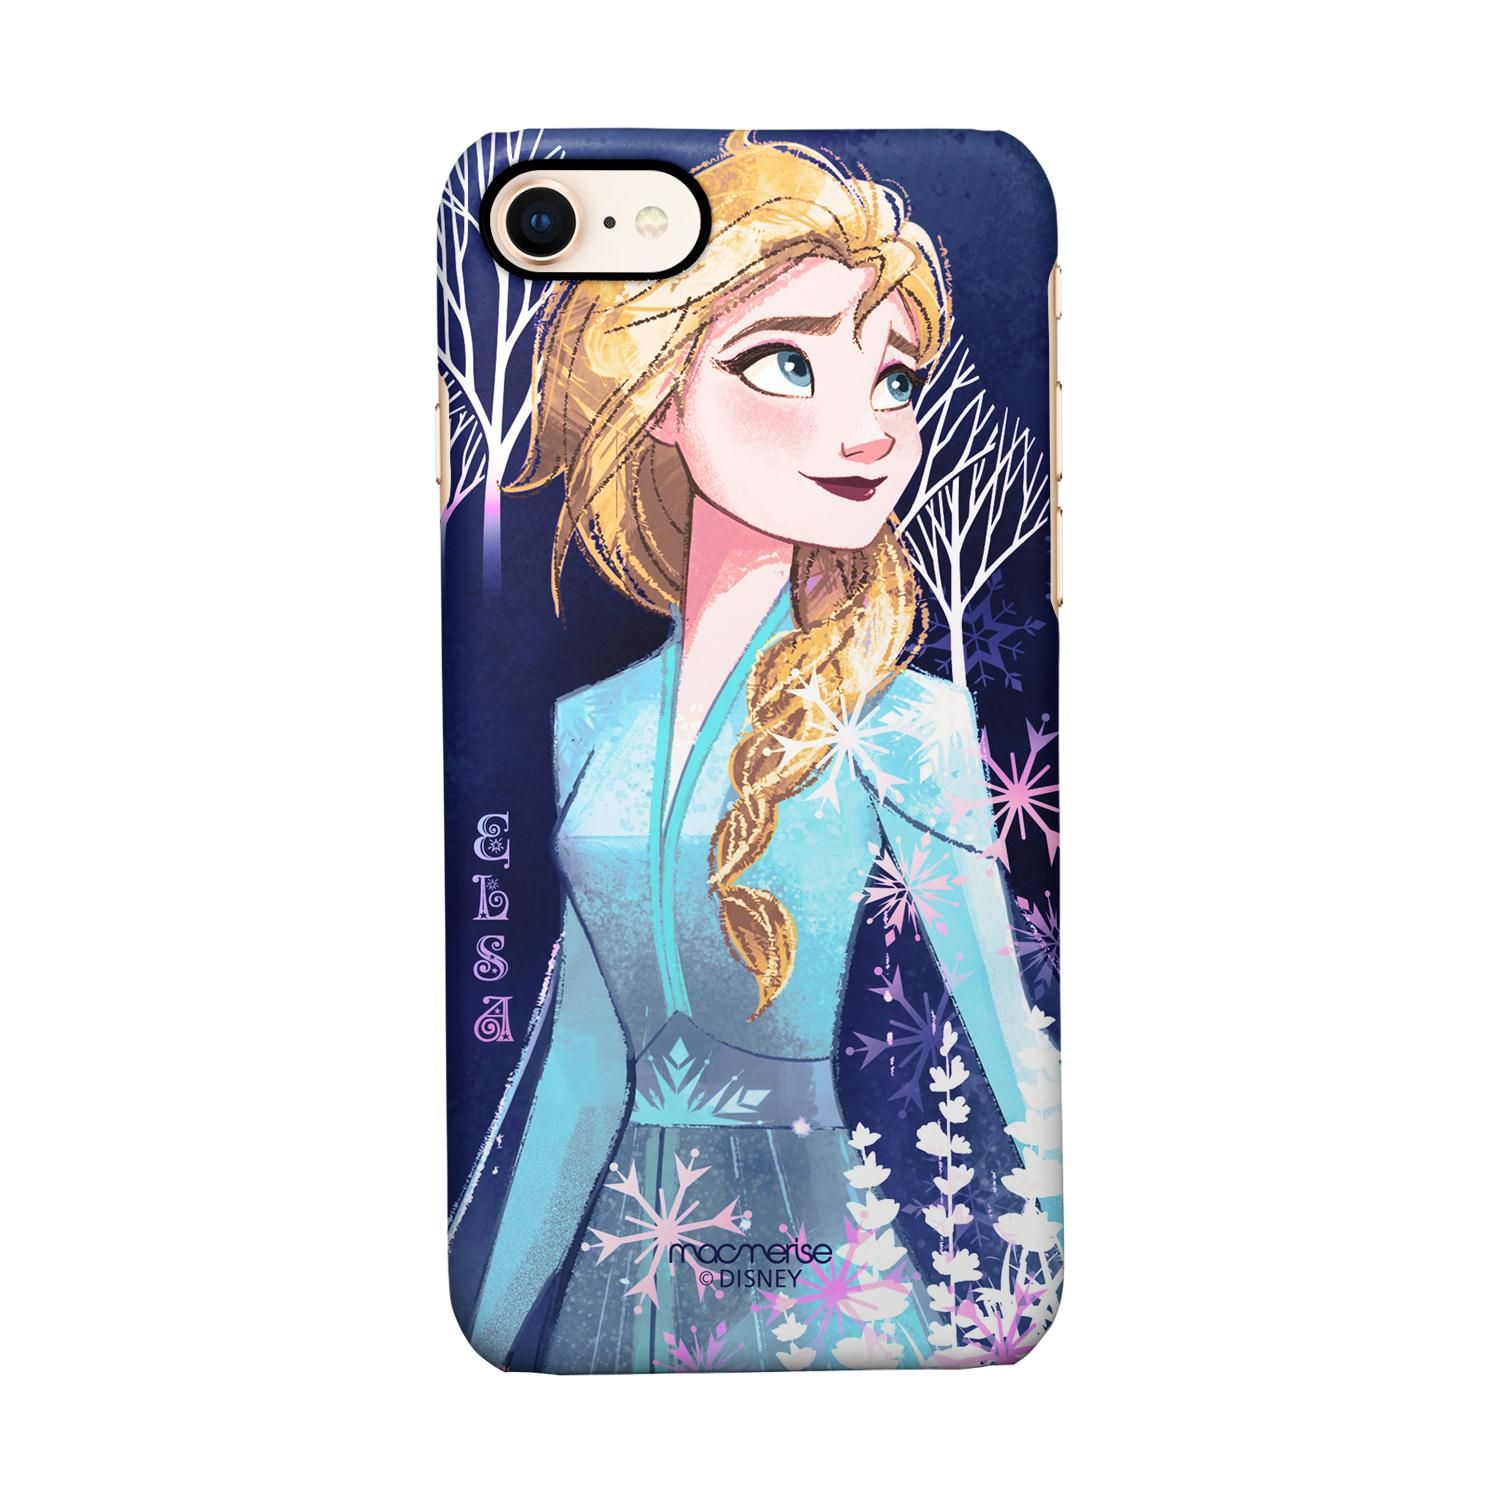 Strong Elsa - Sleek Phone Case for iPhone 7